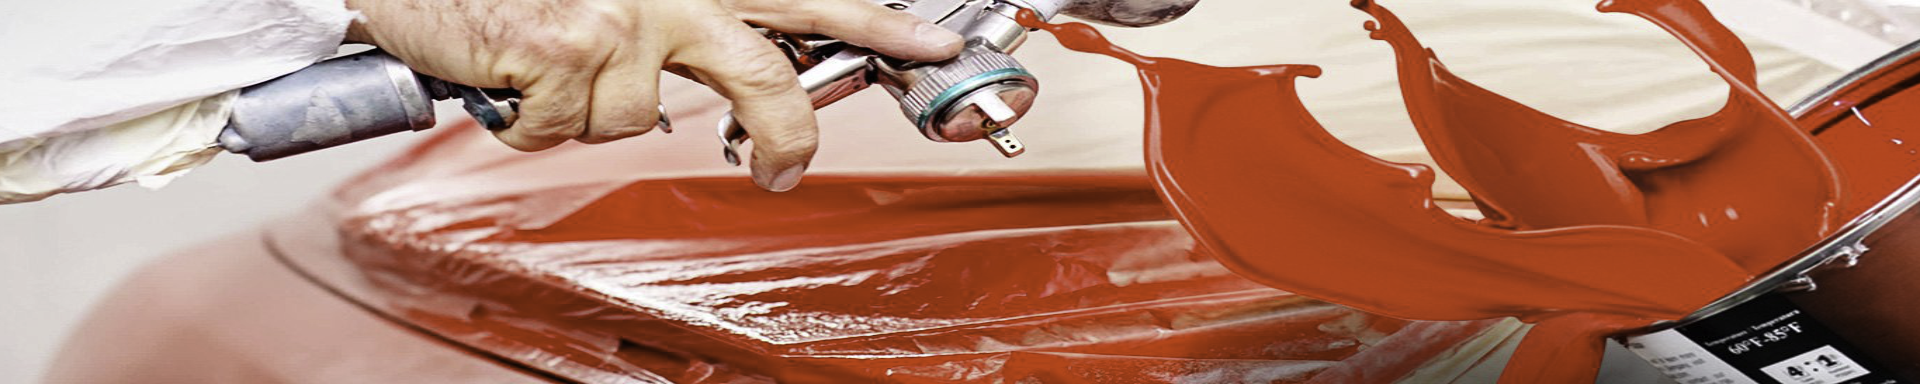 Automotive Paint & Coatings | GarageAndFab.com | Munro Industries gf-1001030302